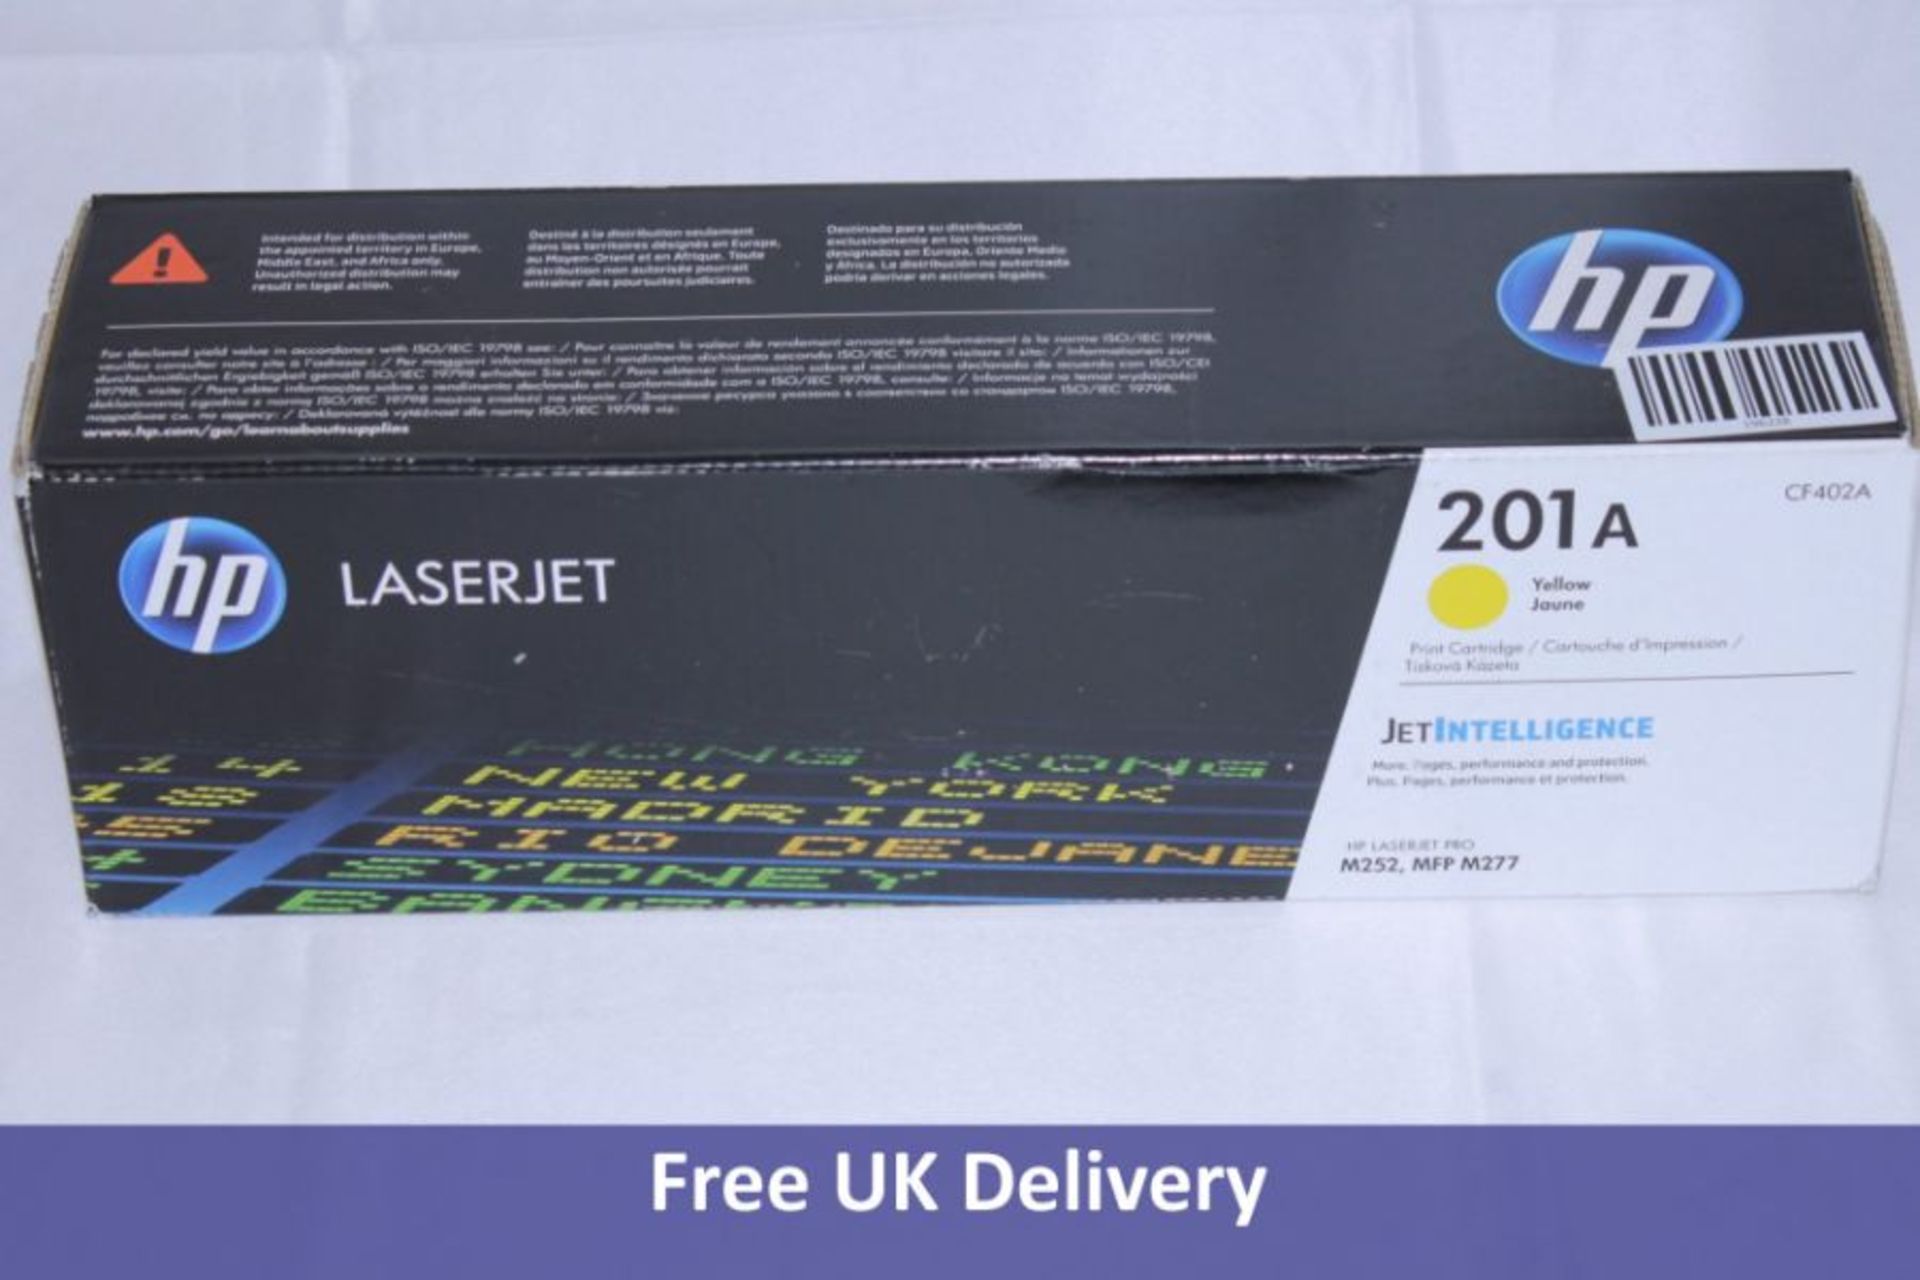 Two HP 201 A Laserjet Yellow Print Cartridge - Image 2 of 2